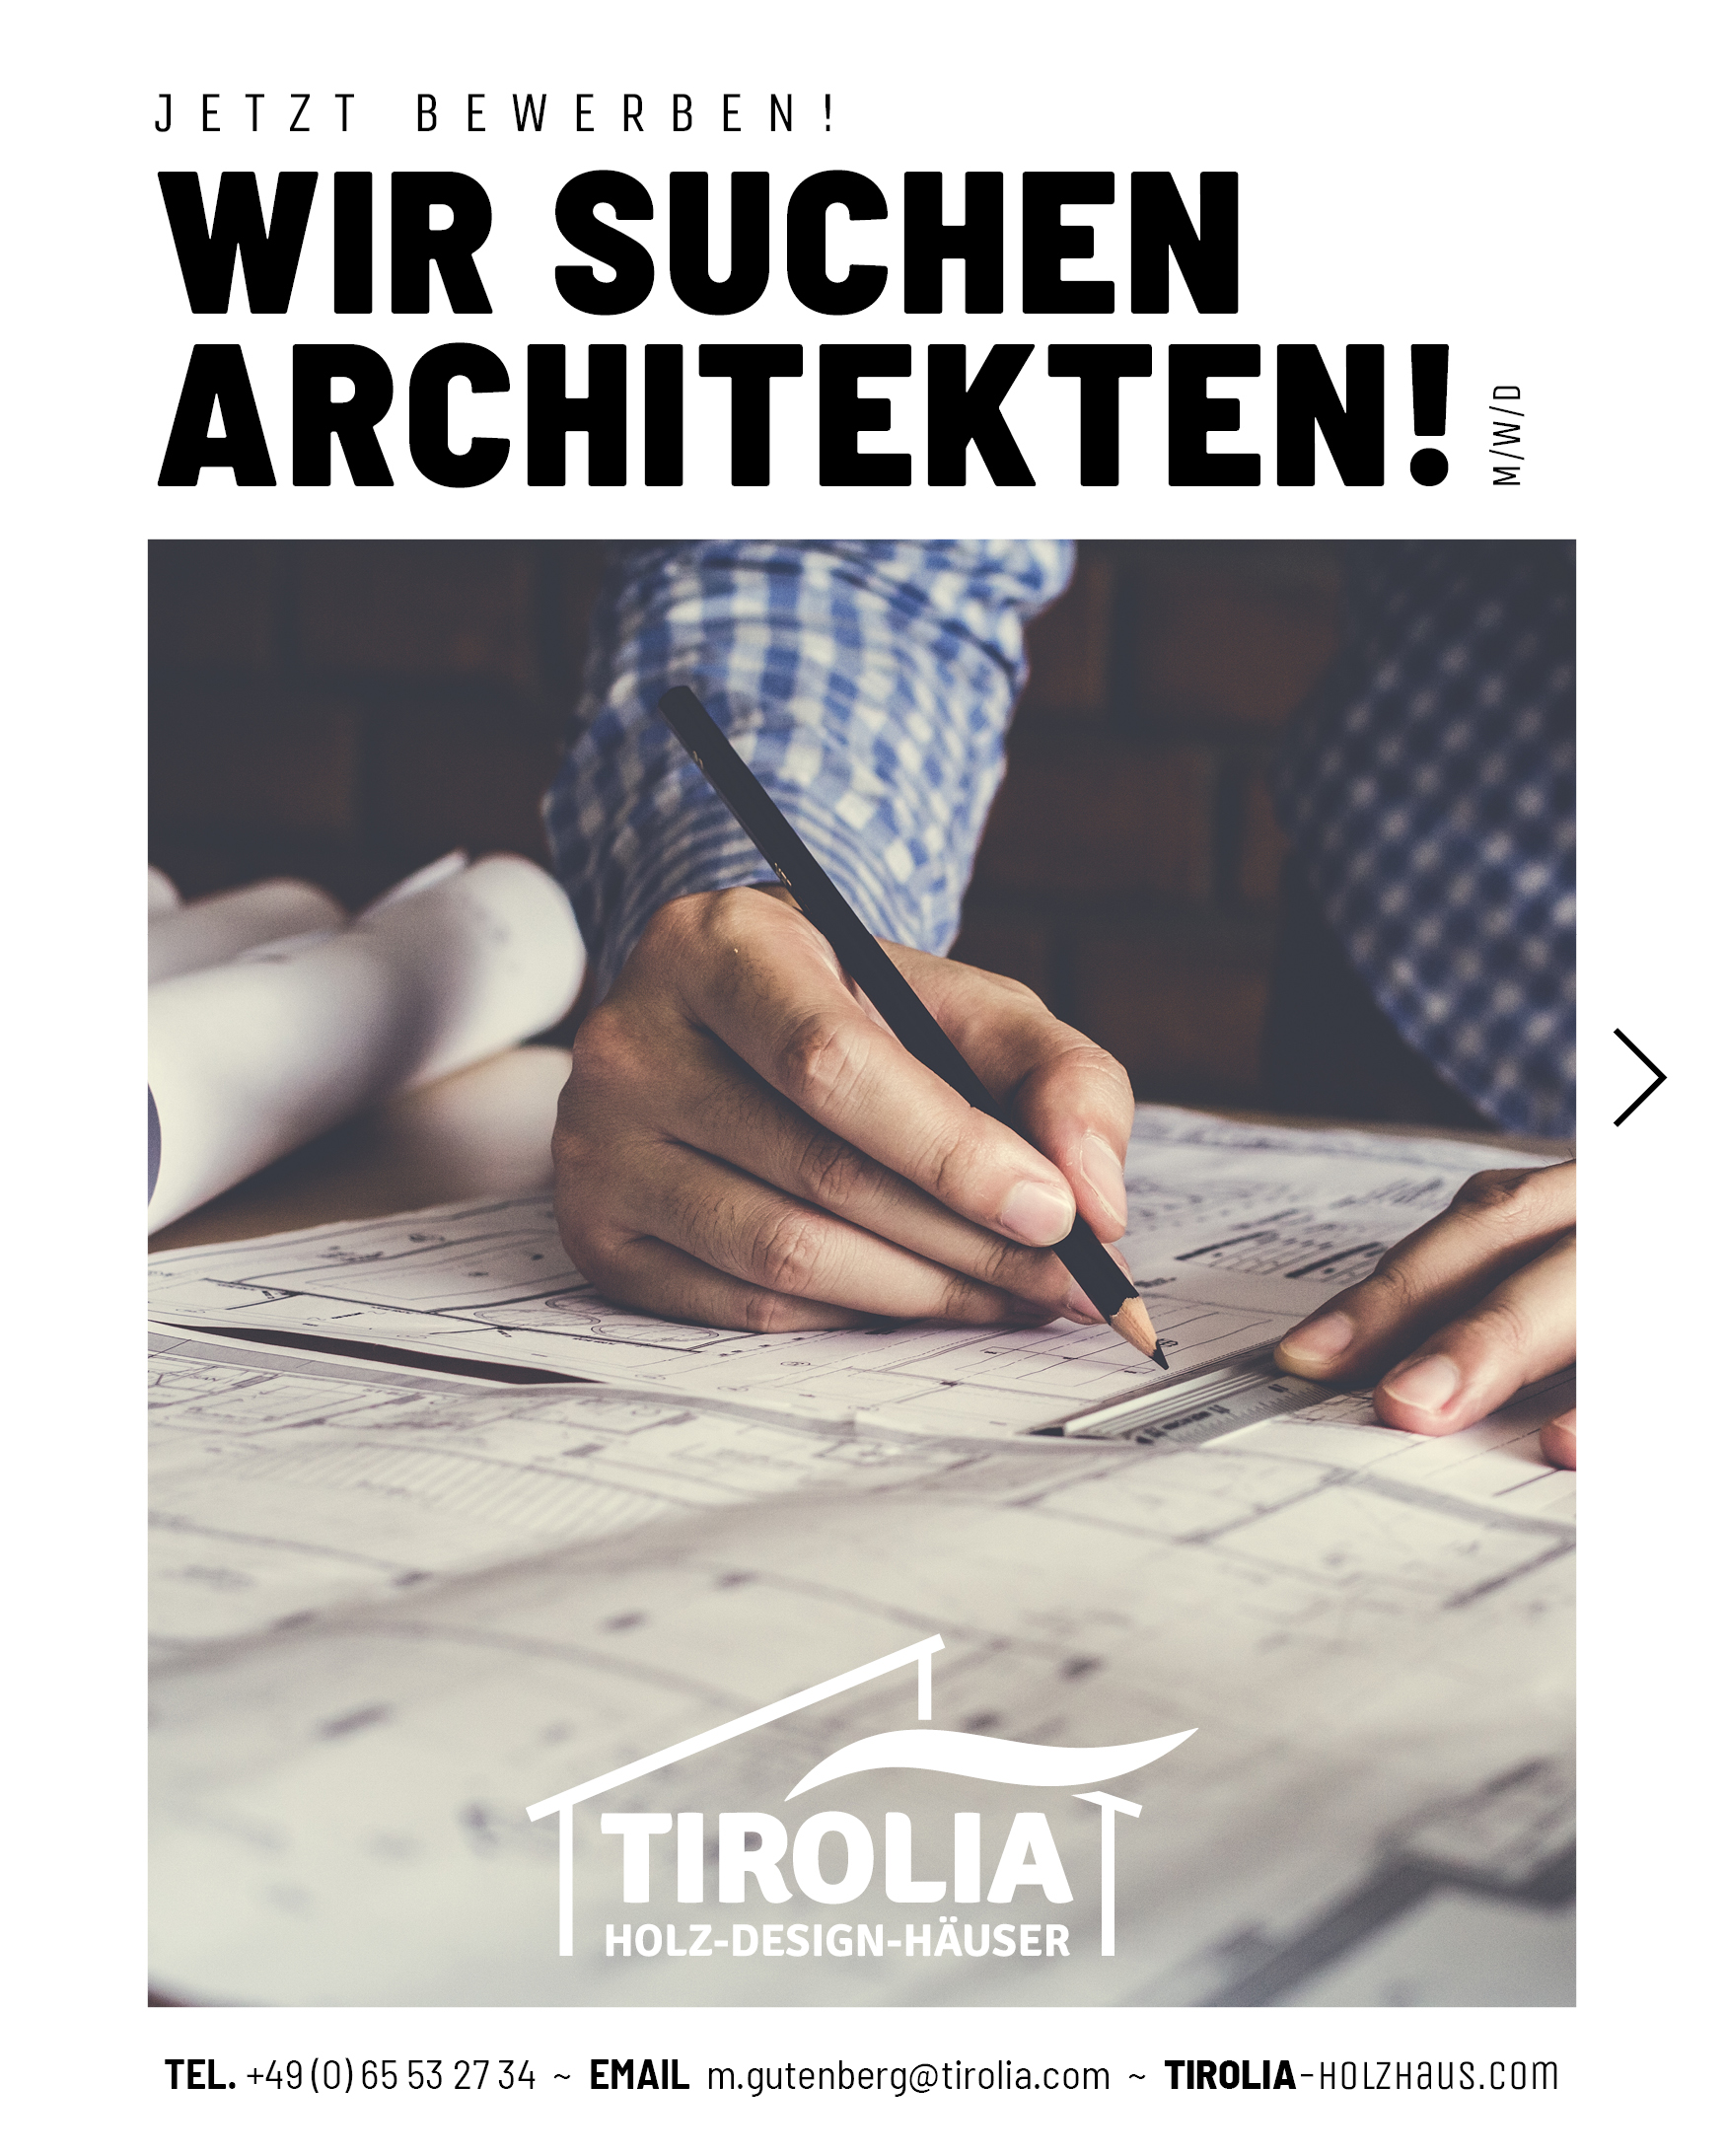 Tirolia – Holzhausbau | Florian & Maximilian Gutenberg - Tirolia GmbH | Stellenanzeige: Wir suchen Architekten!